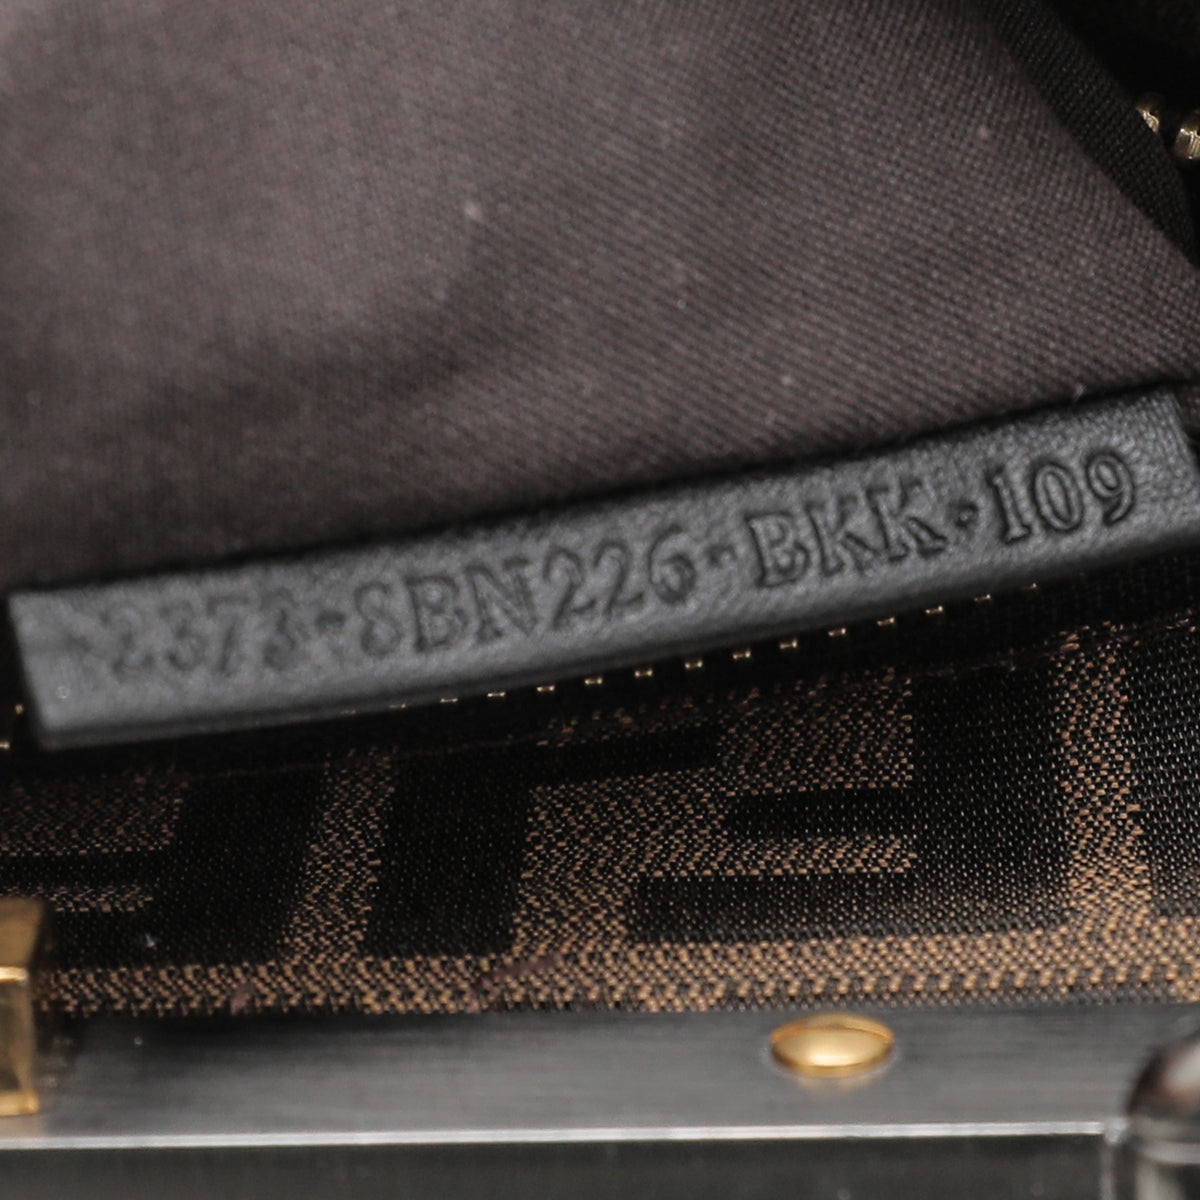 Fendi Black Iconic Peekaboo Zucca Lined Bag